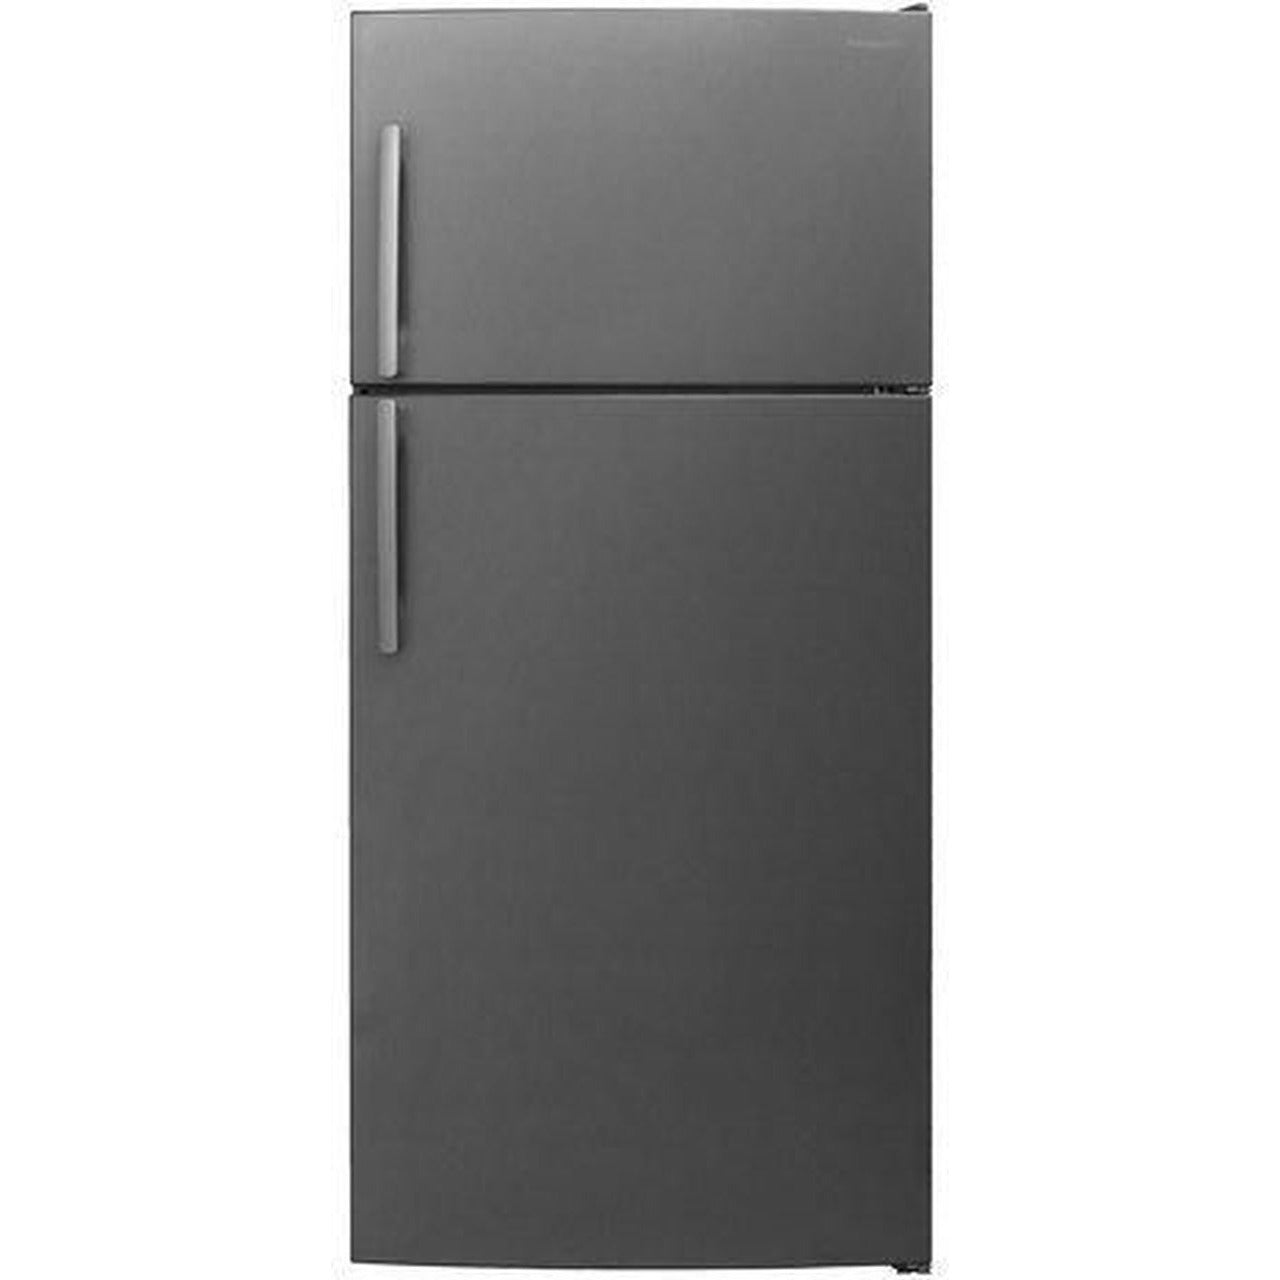 Panasonic 575L Top Freezer Refrigerator